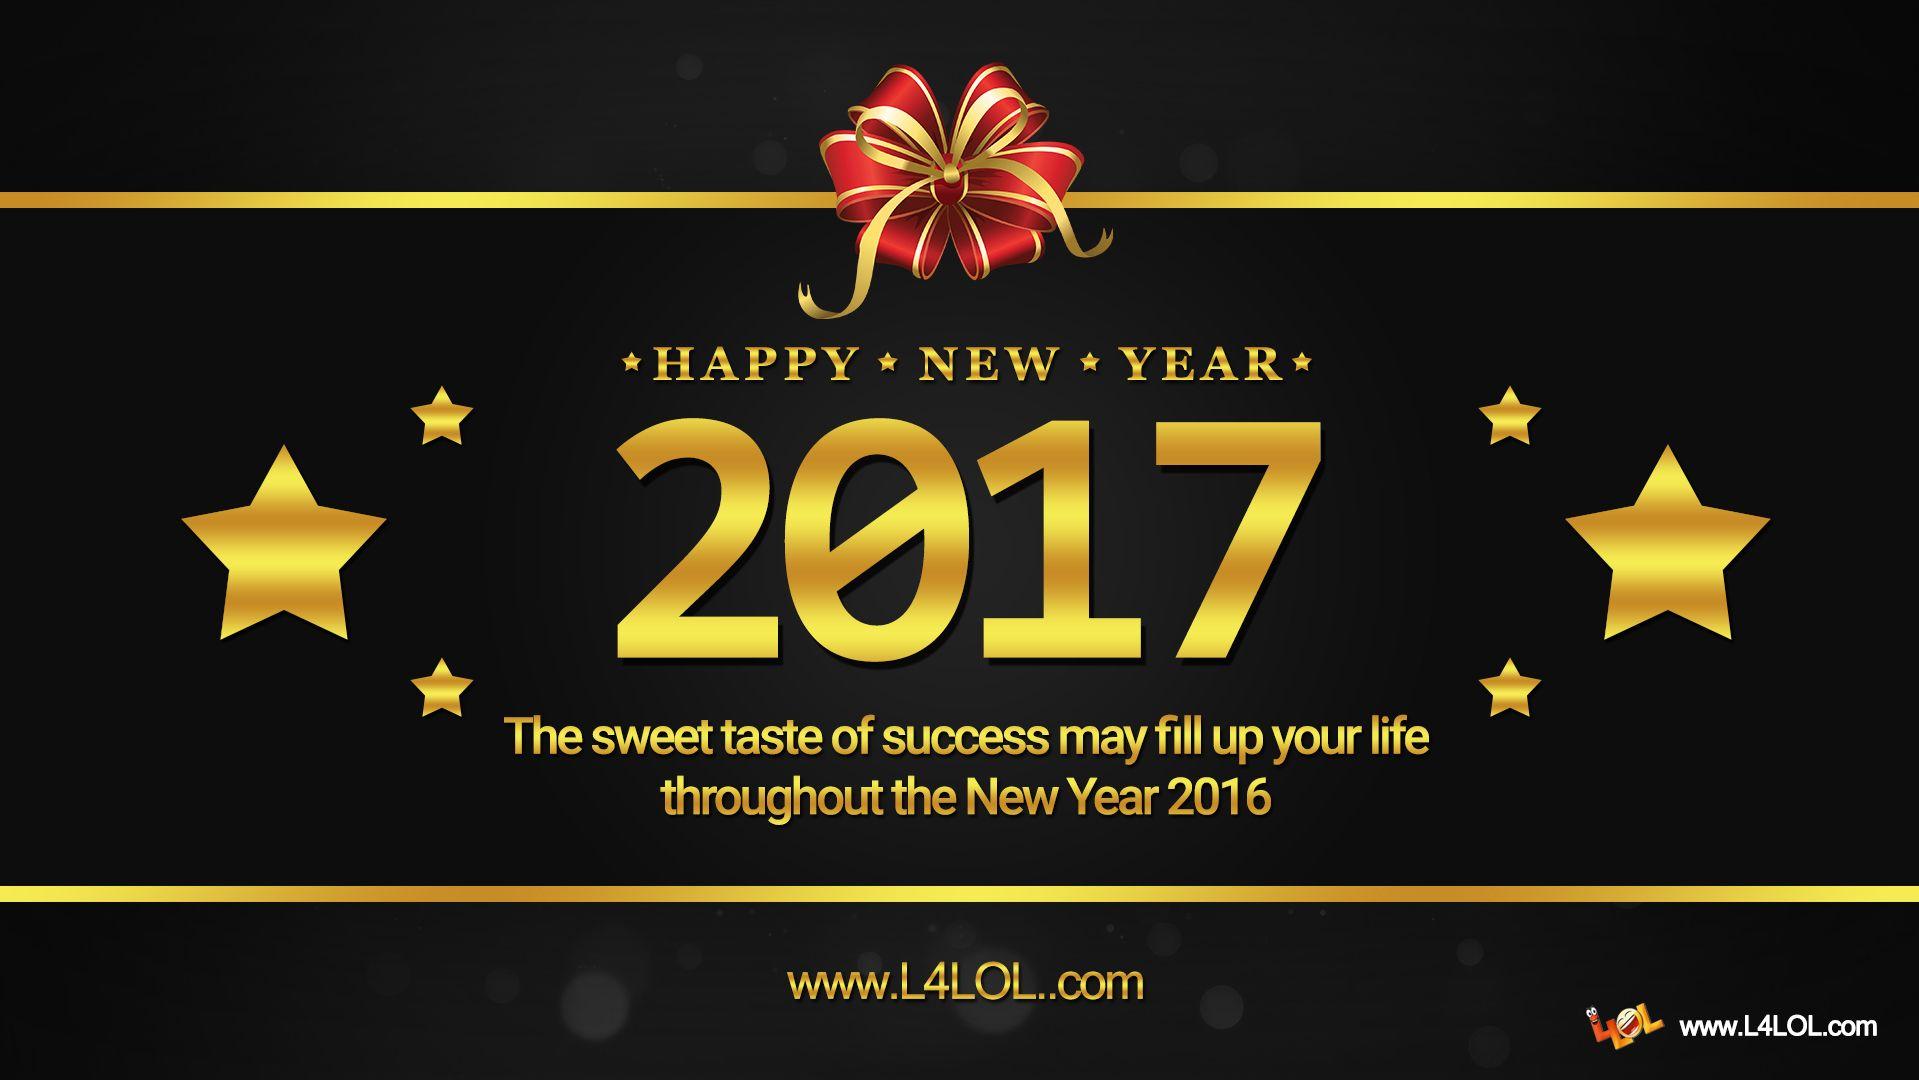 Year 2017 Logo - Happy New Year 2017 Logo Background Wallpaper 11373 - Baltana